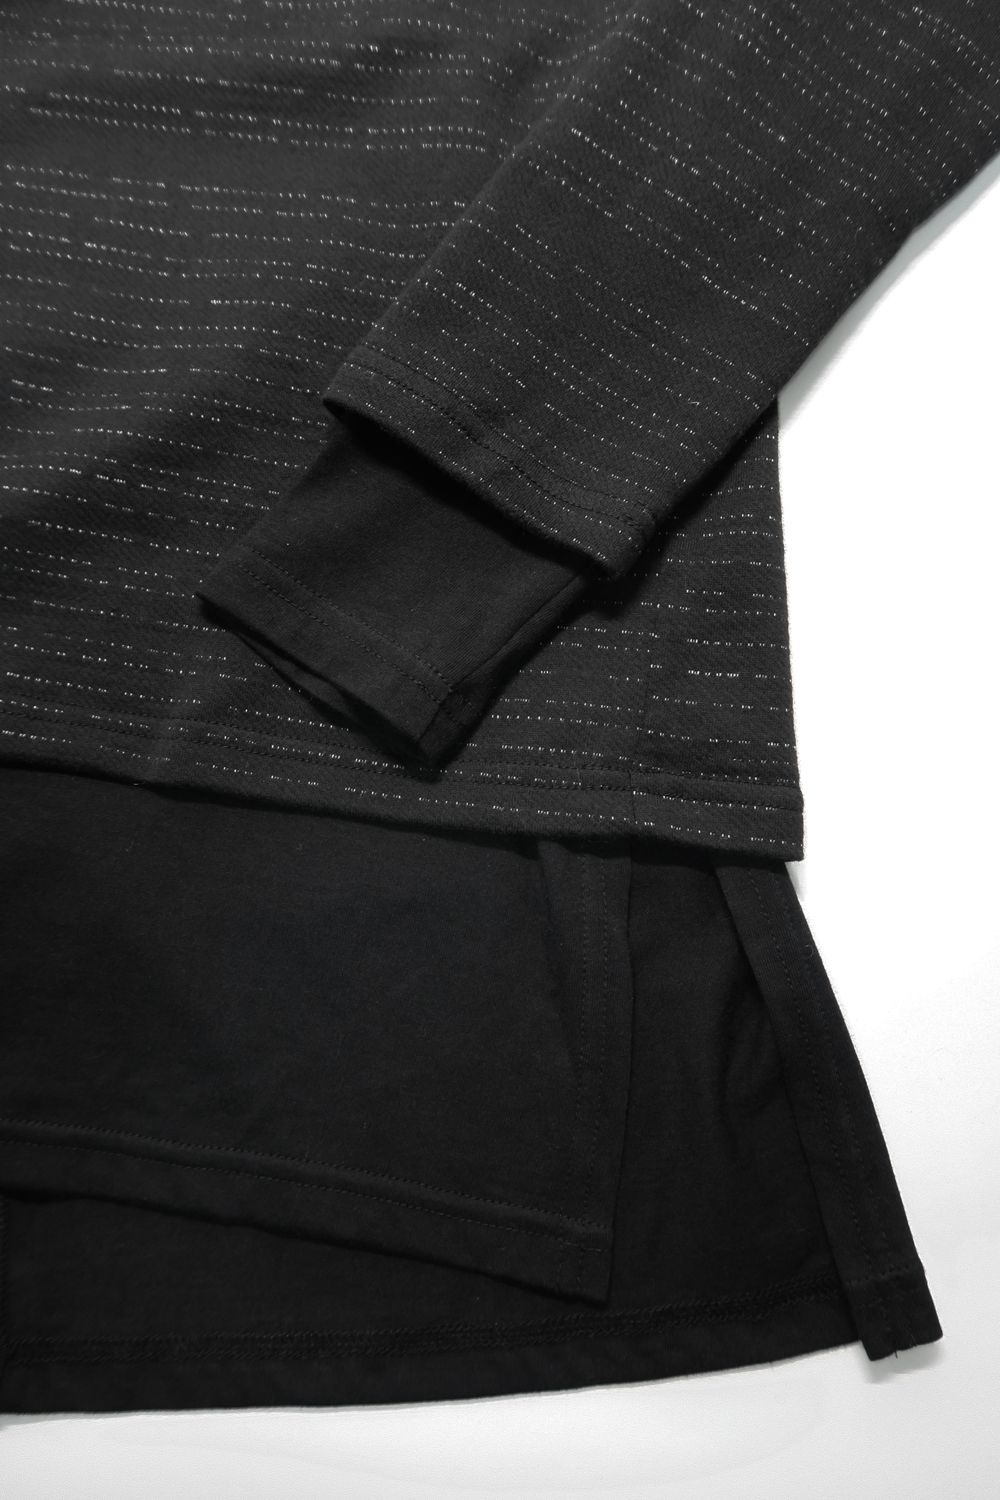 Layered Over Sized Long Sleeve Tee"Black"/レイヤードオーバーサイズロングスリーブTee"ブラック"